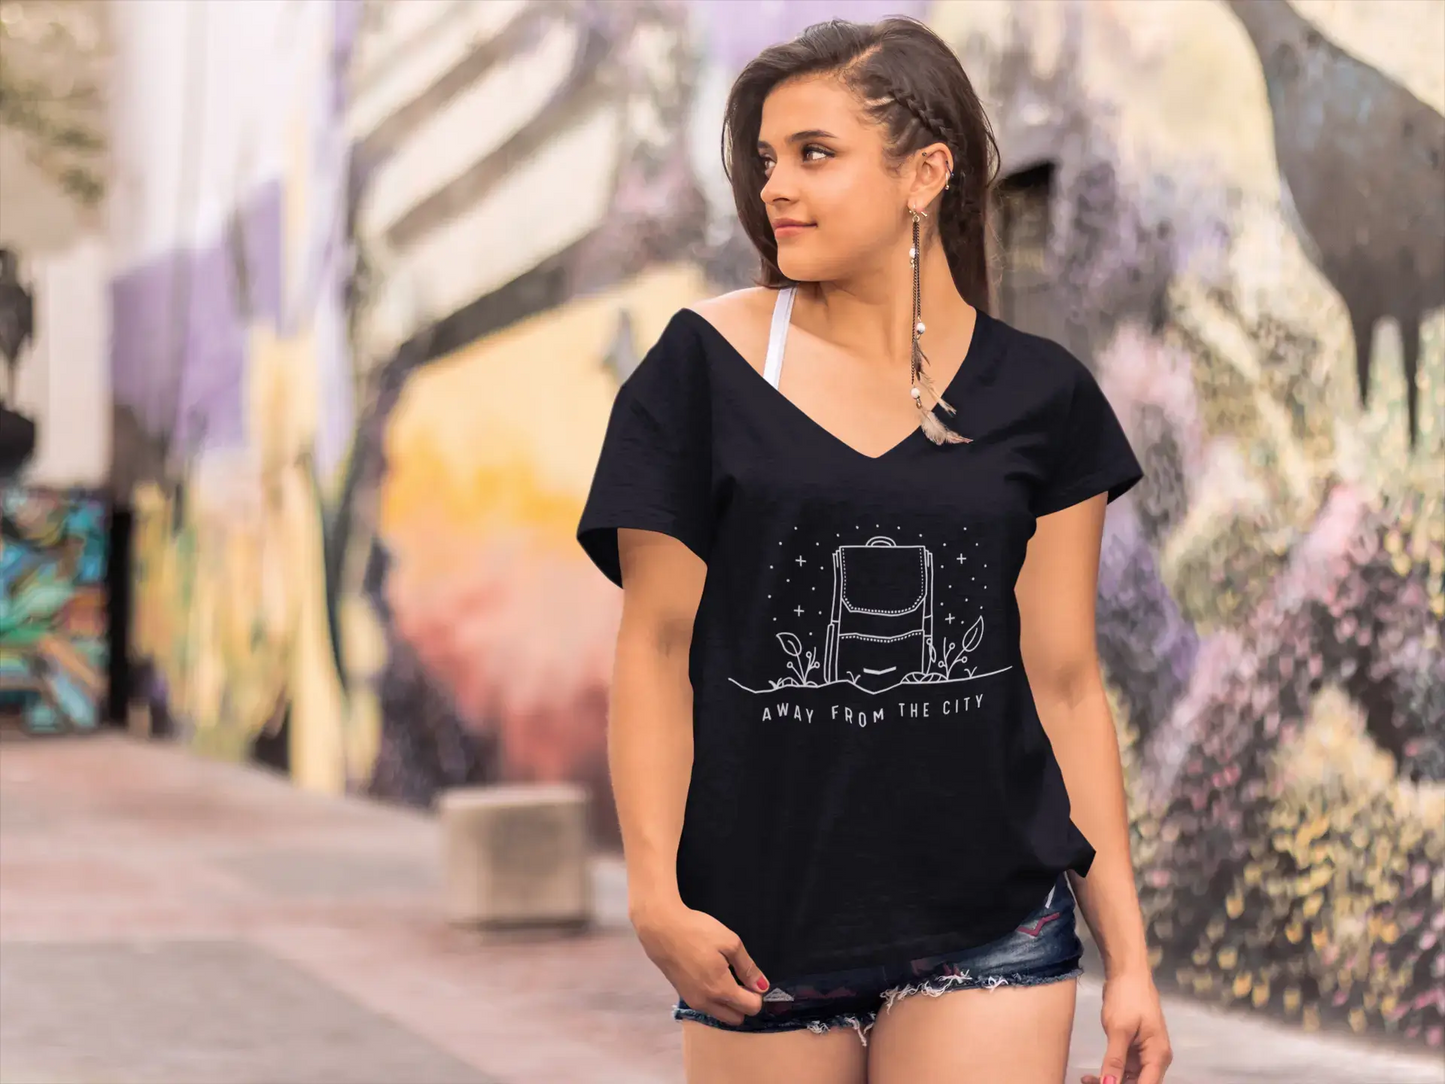 ULTRABASIC Women's T-Shirt Adventure Shirt - Away from the City - Novelty Shirts for Women Black